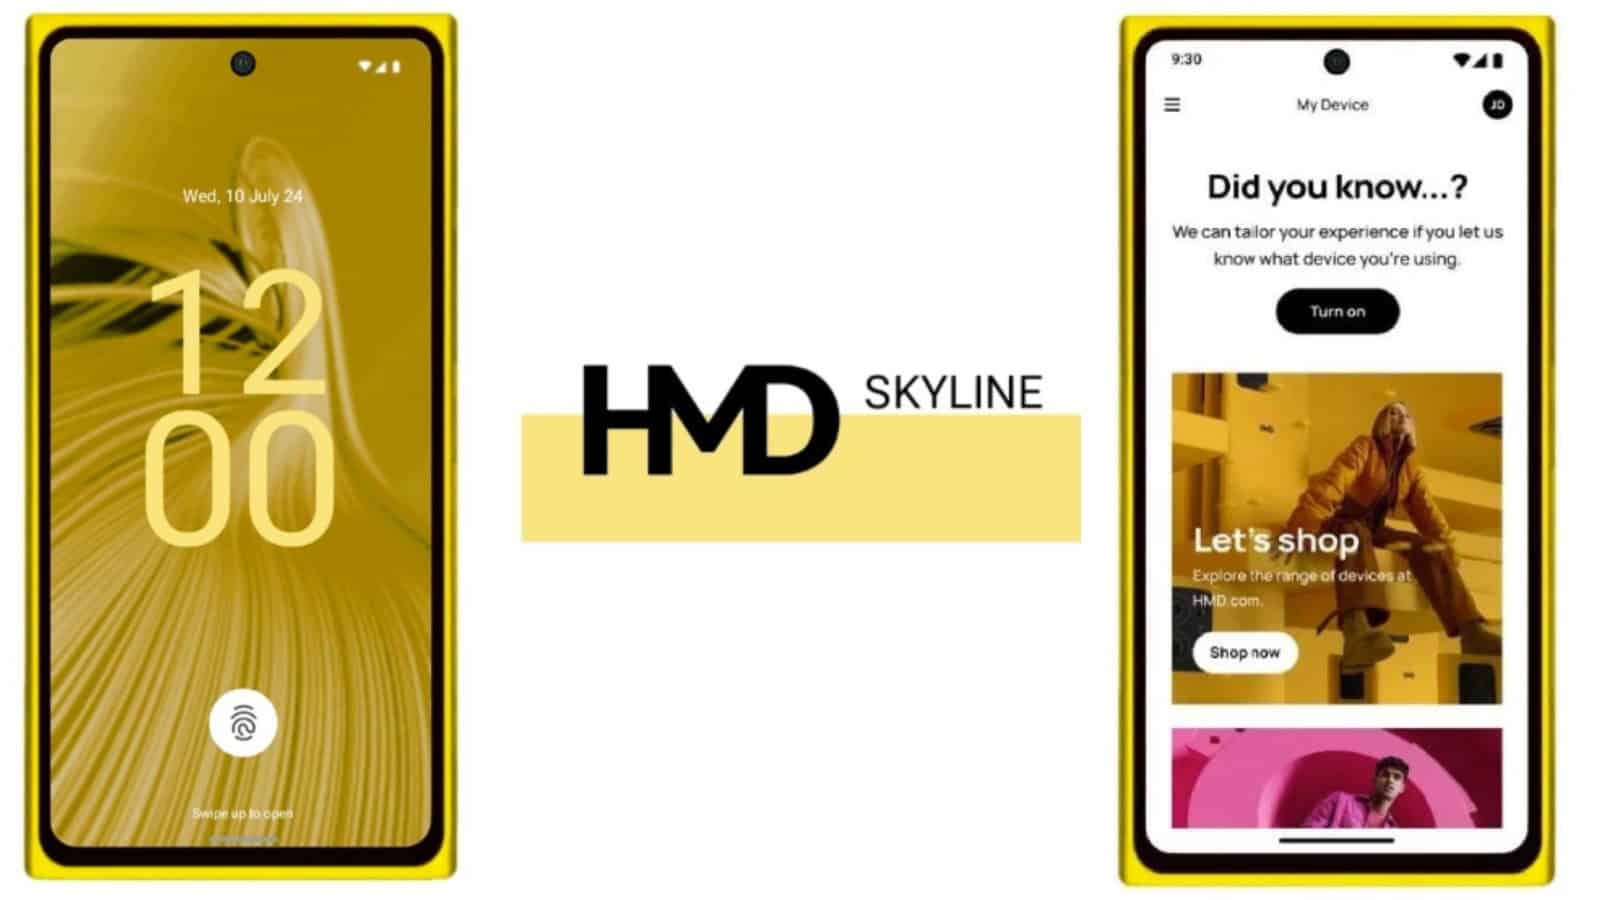 HMD, Skyline, Nokia